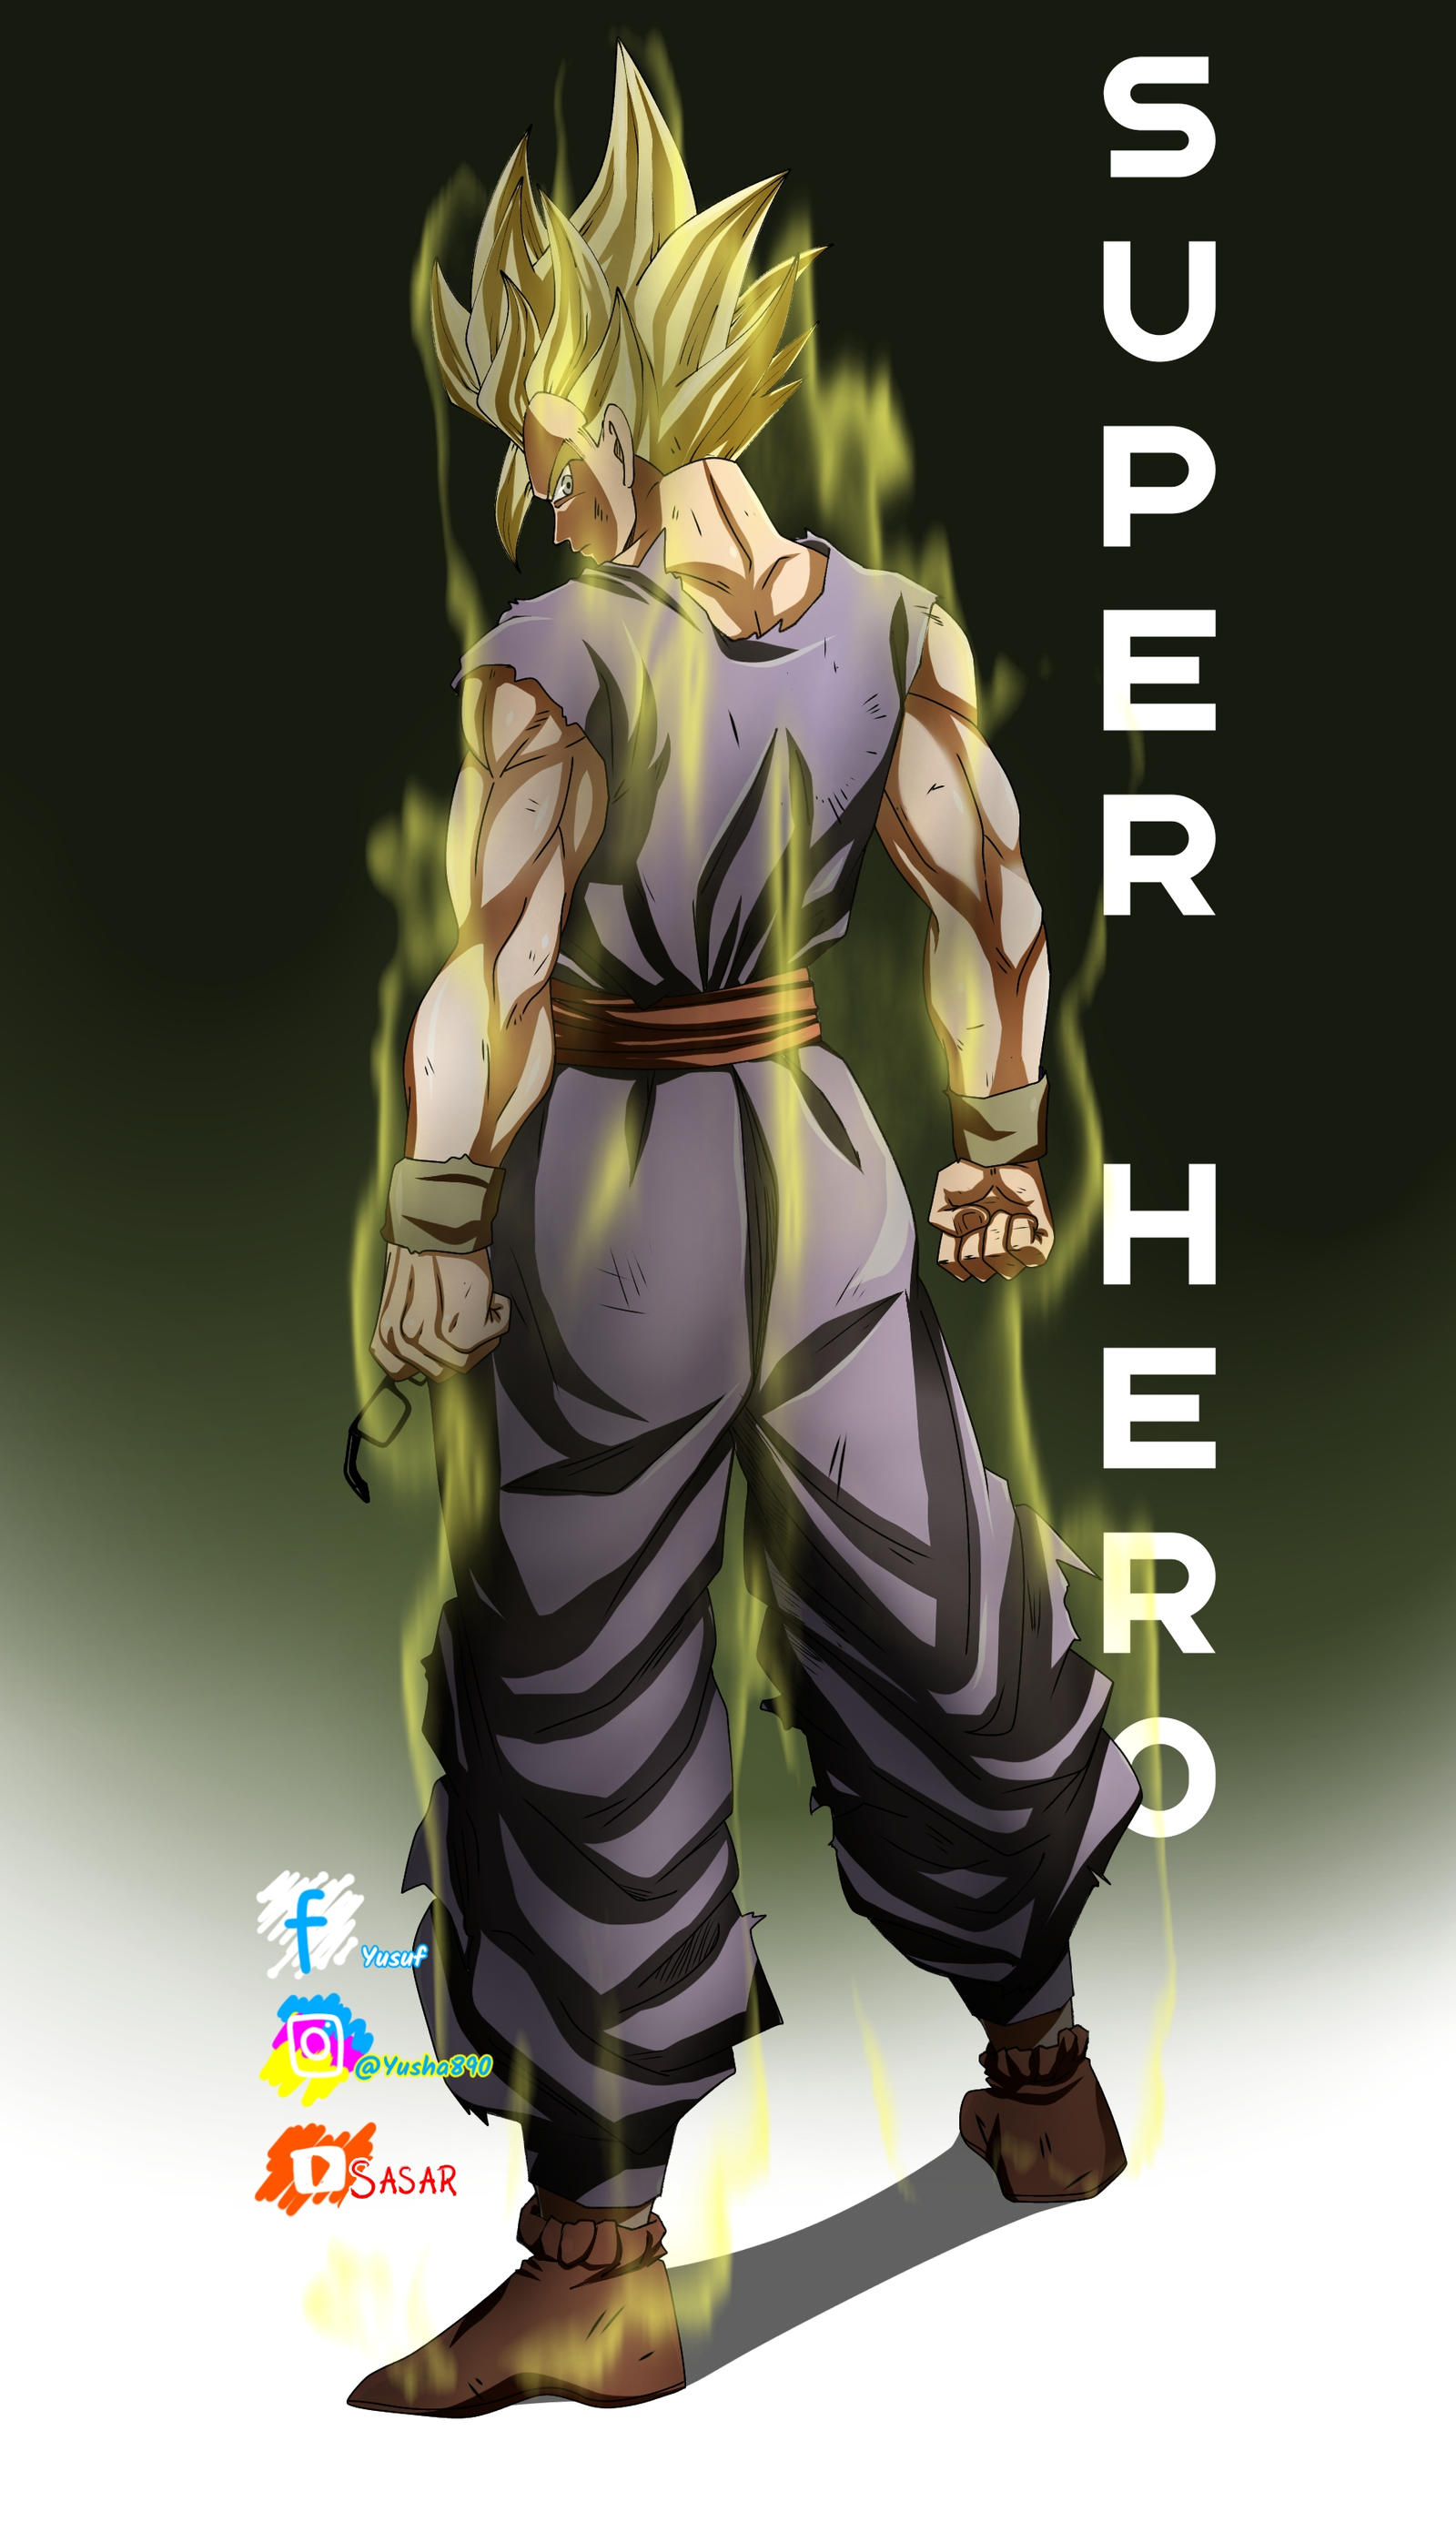 Dragon Ball Super: Super Hero - Why Gohan's Super Saiyan 4 Form is